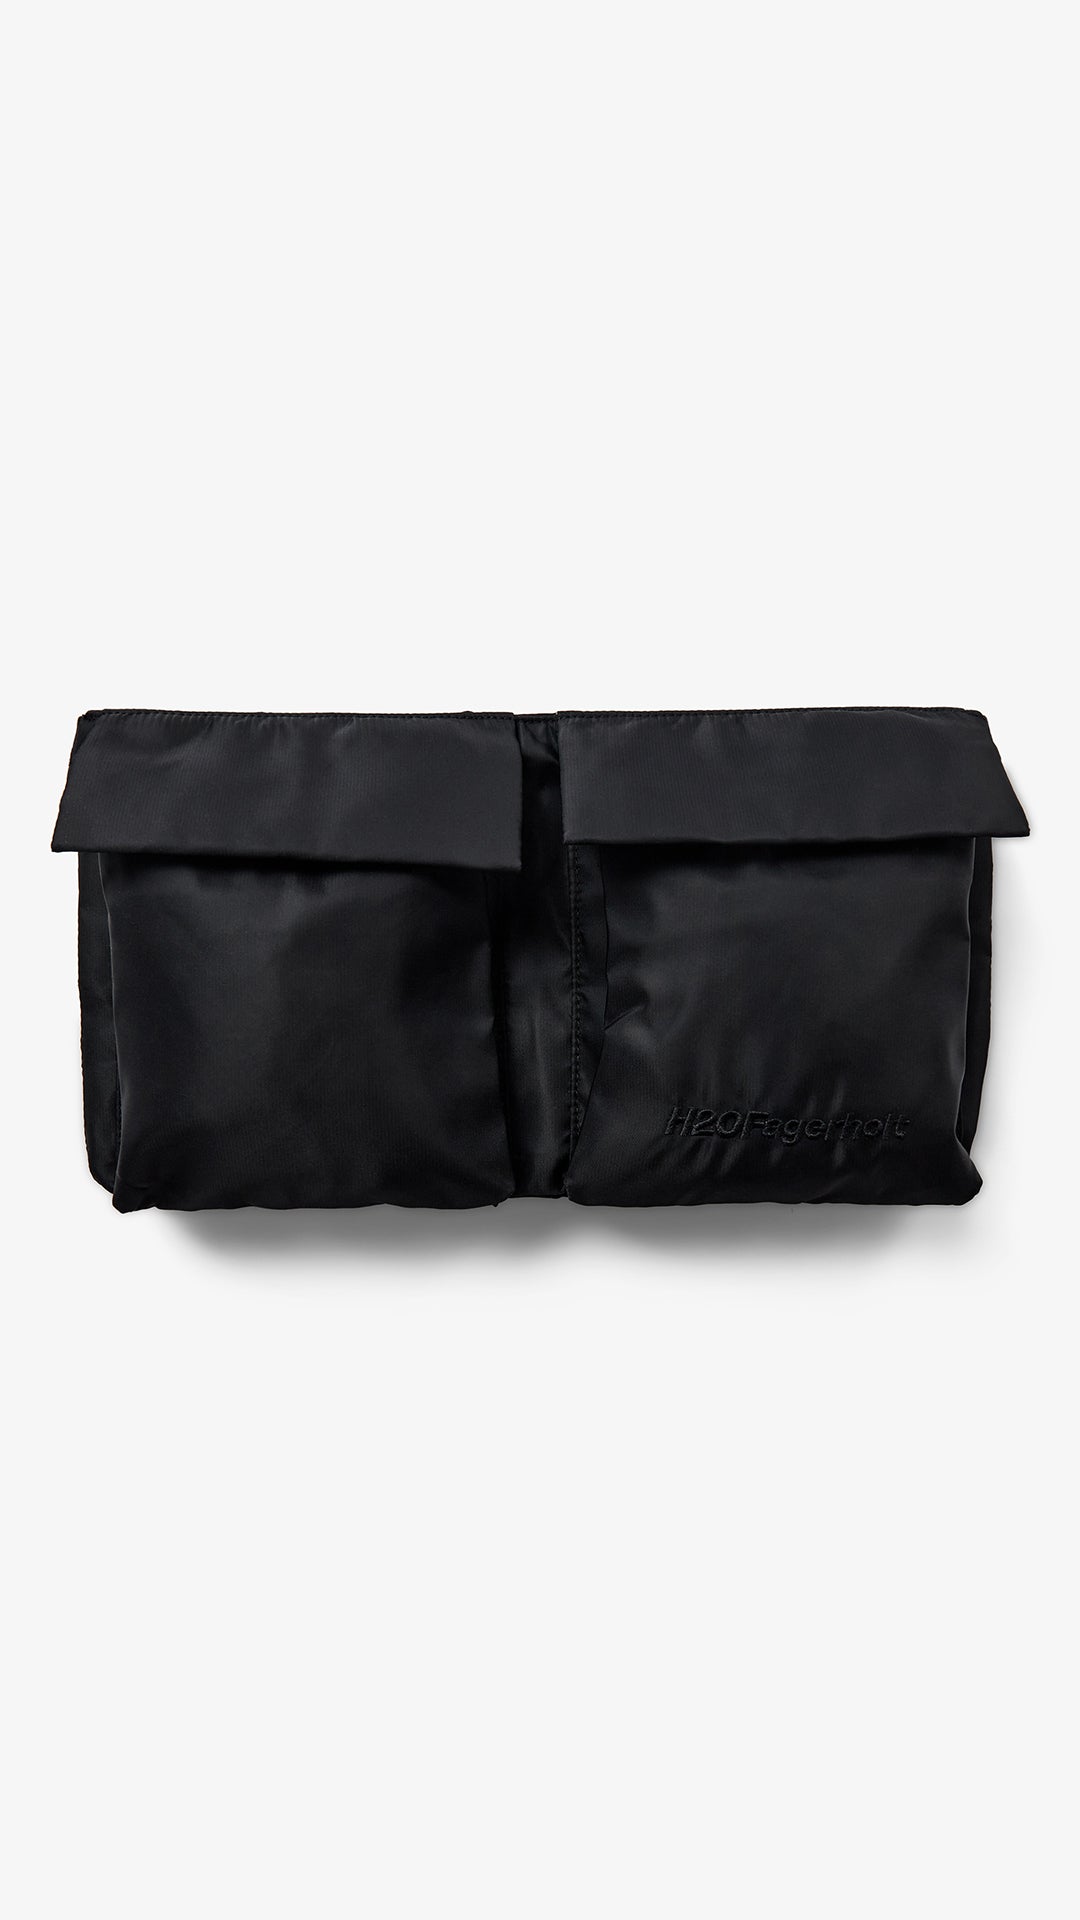 H2OFagerholt Lily Bag Bag 3501 Deep Black